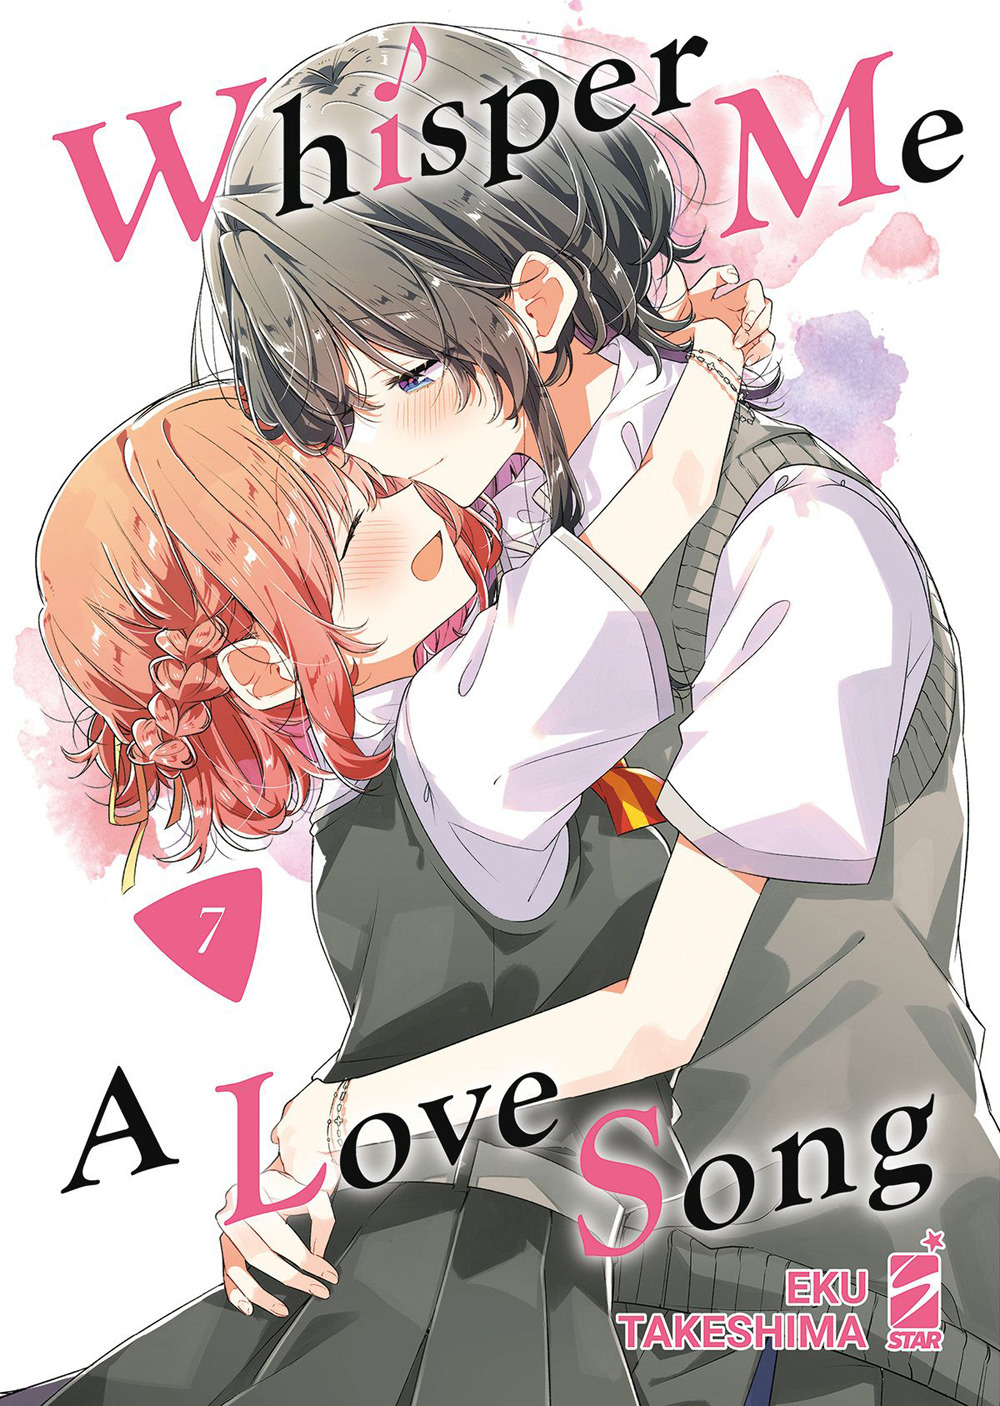 Whisper me a love song. Vol. 7